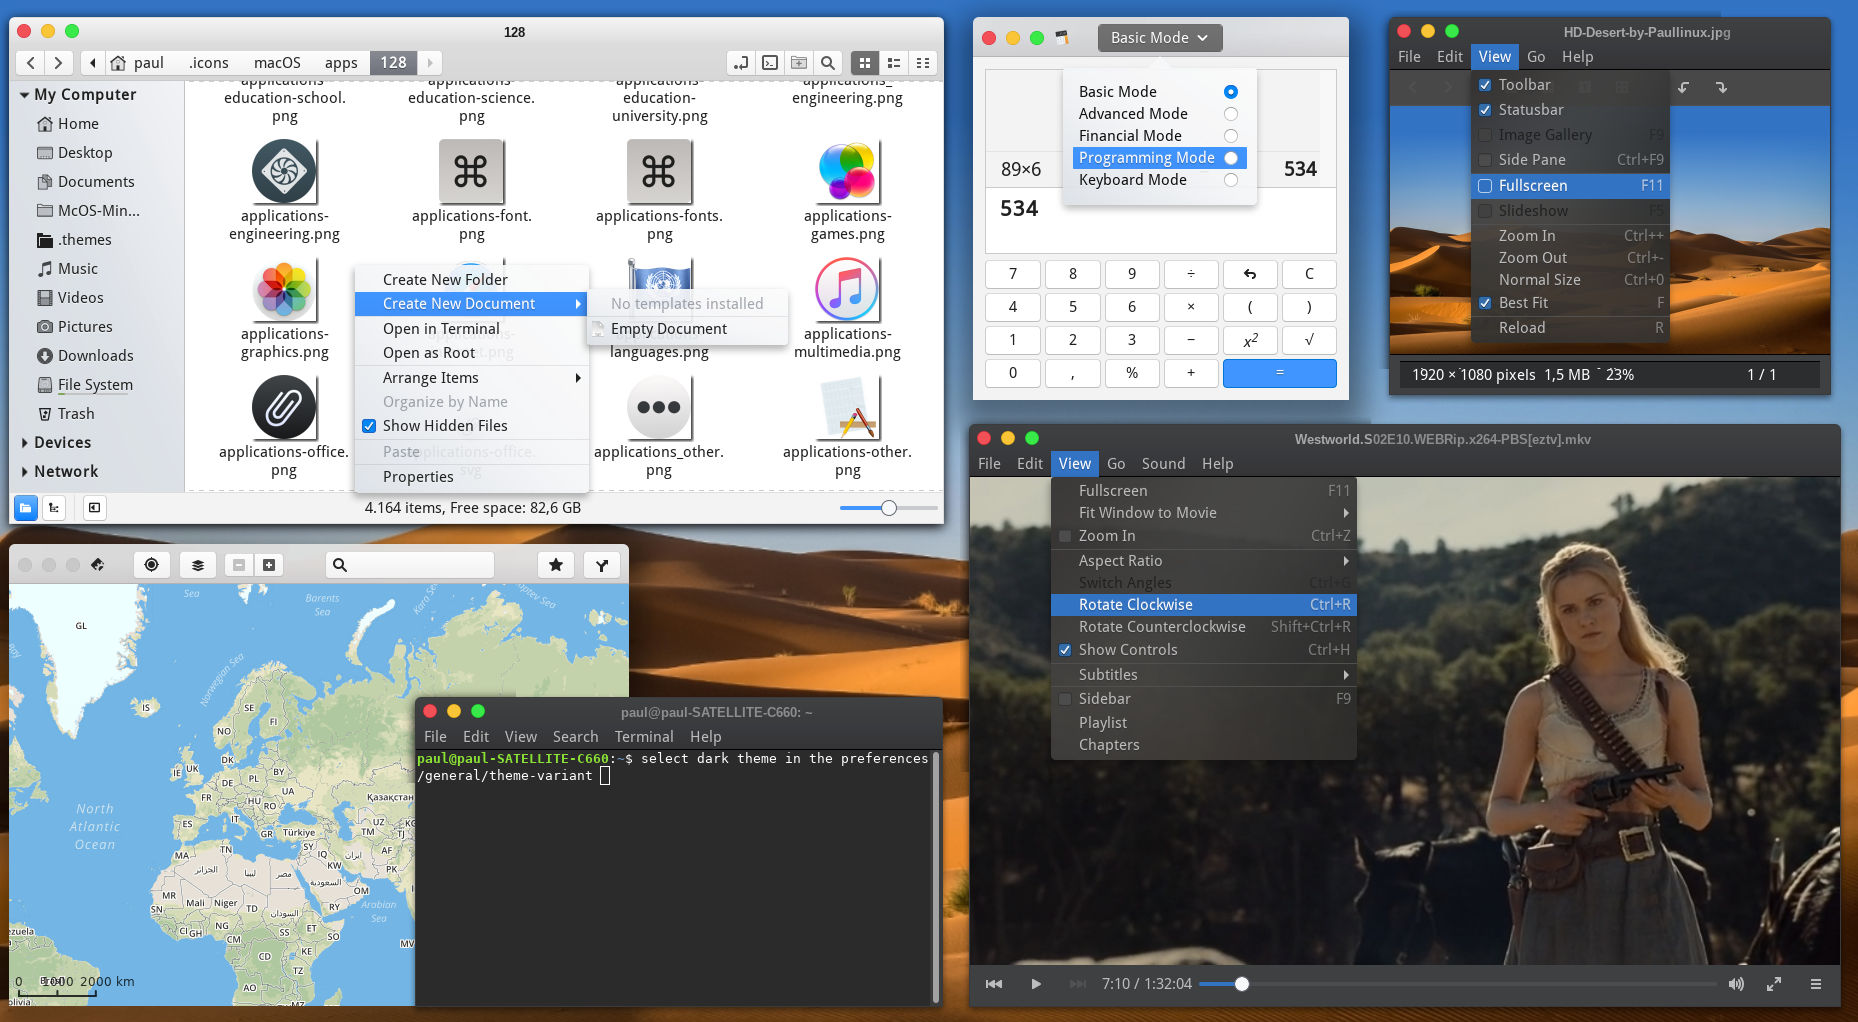 mac os theme for windows 7 32 bit